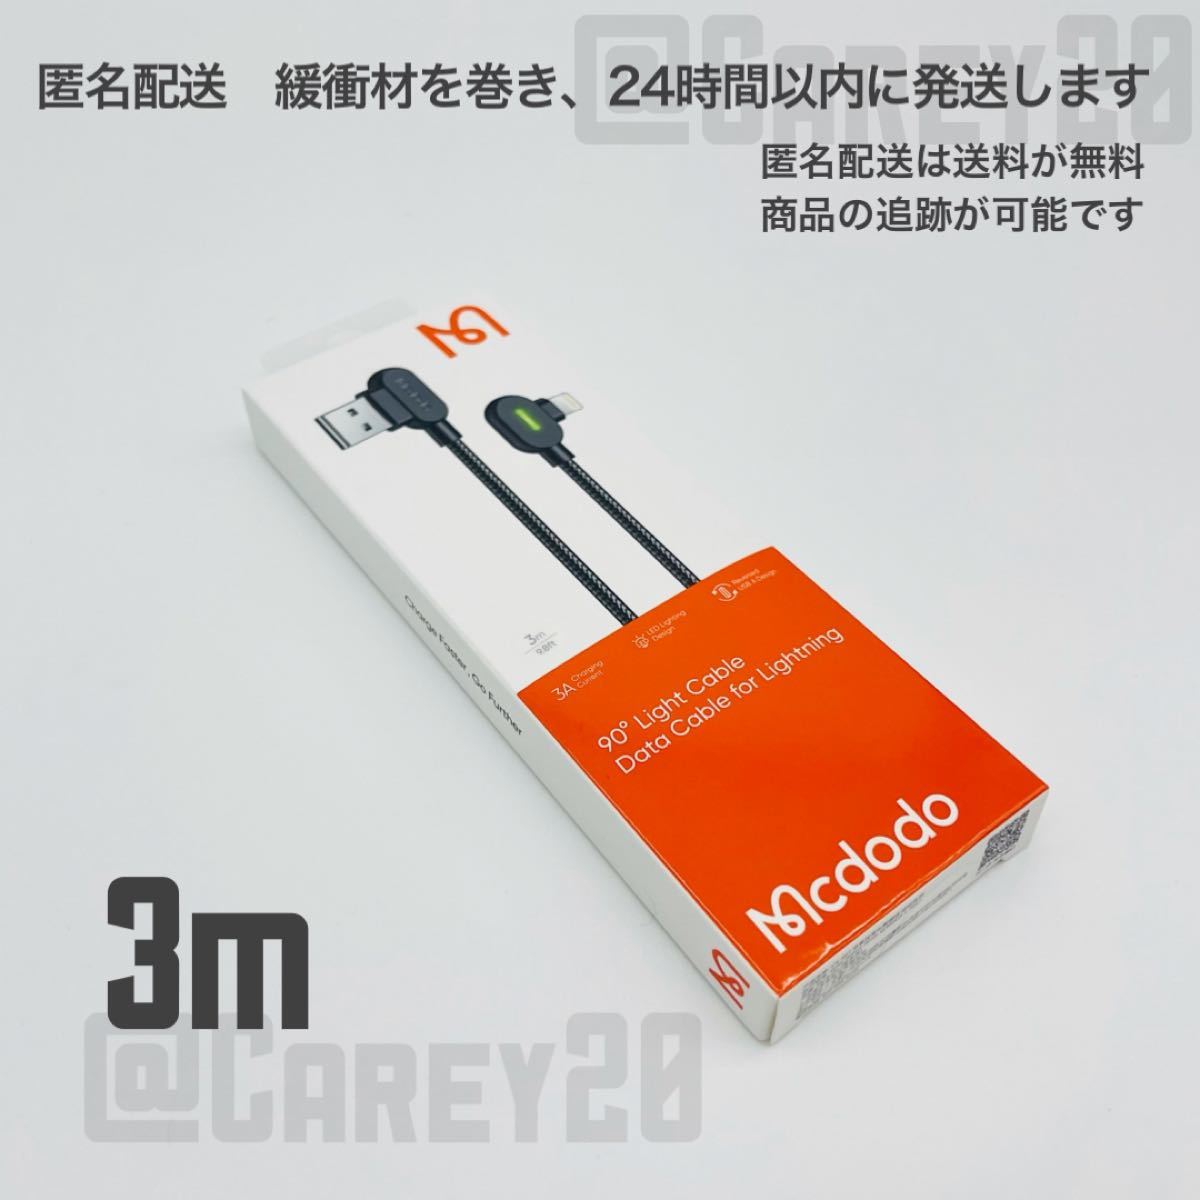 【L字型 3m】mcdodo社製 充電 ケーブル ライトニングケーブル iPhone急速充電 USB ケーブル データ転送 充電器